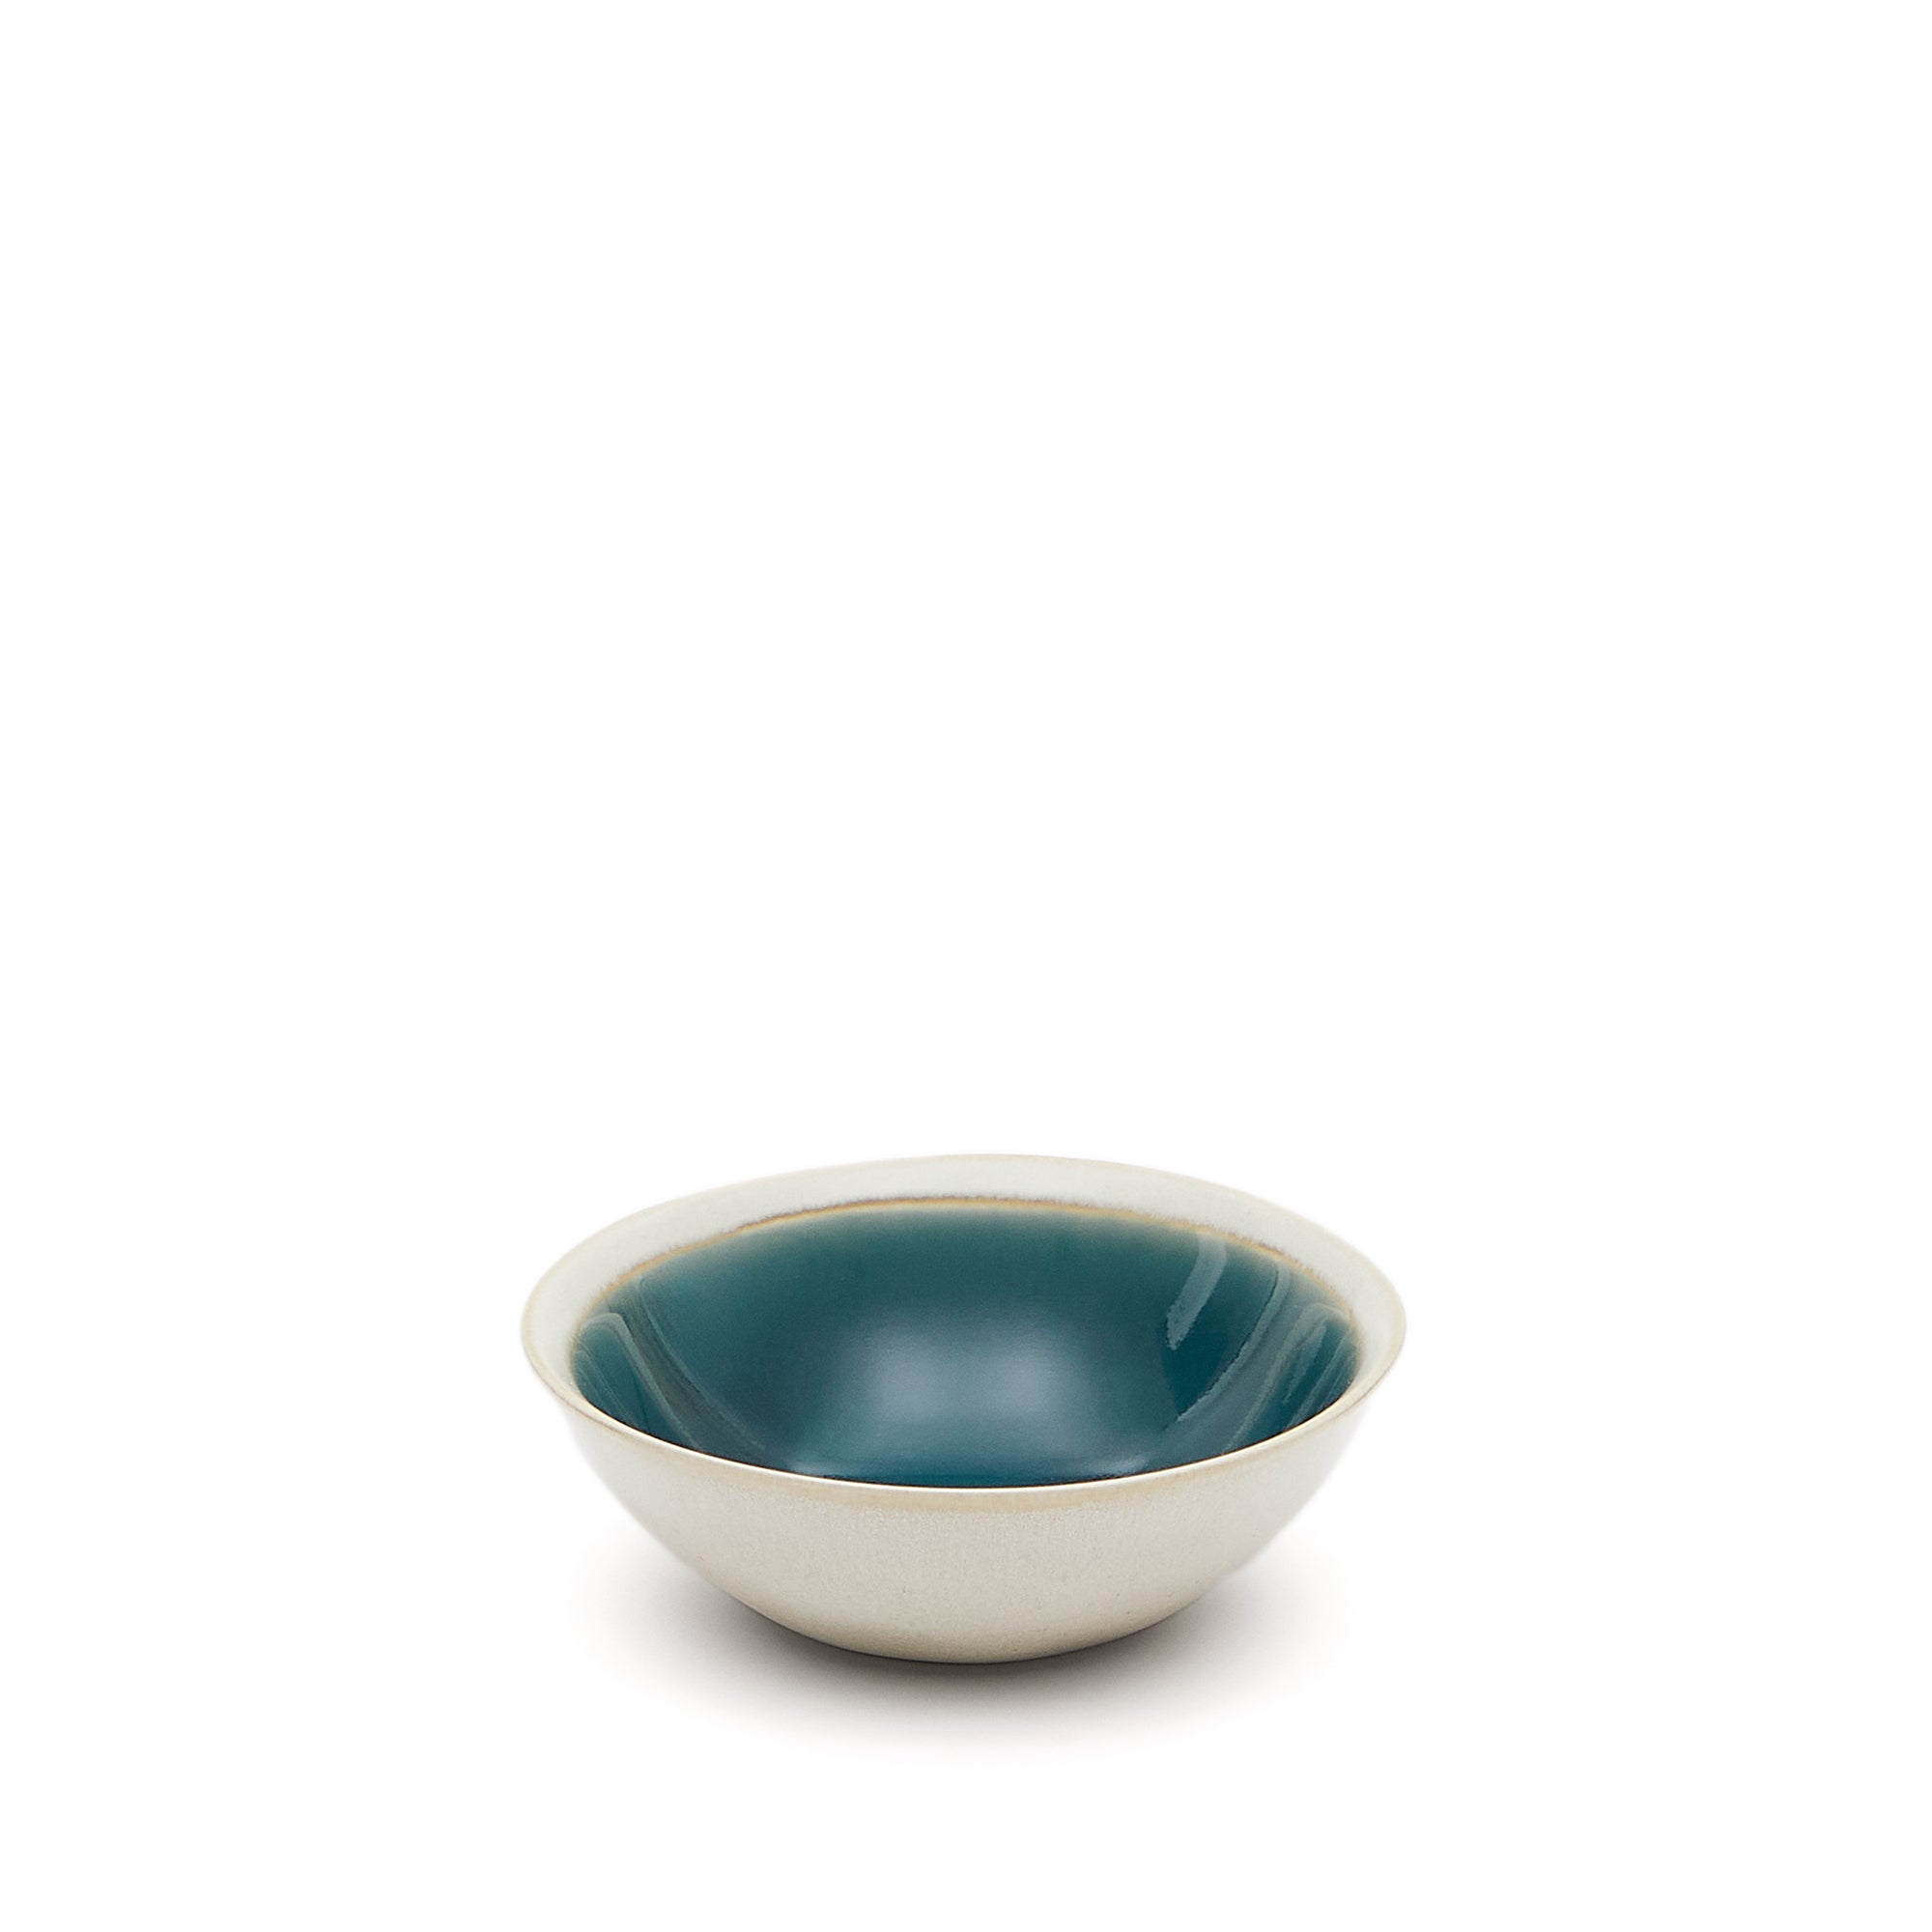 Sanet blue and white ceramic bowl